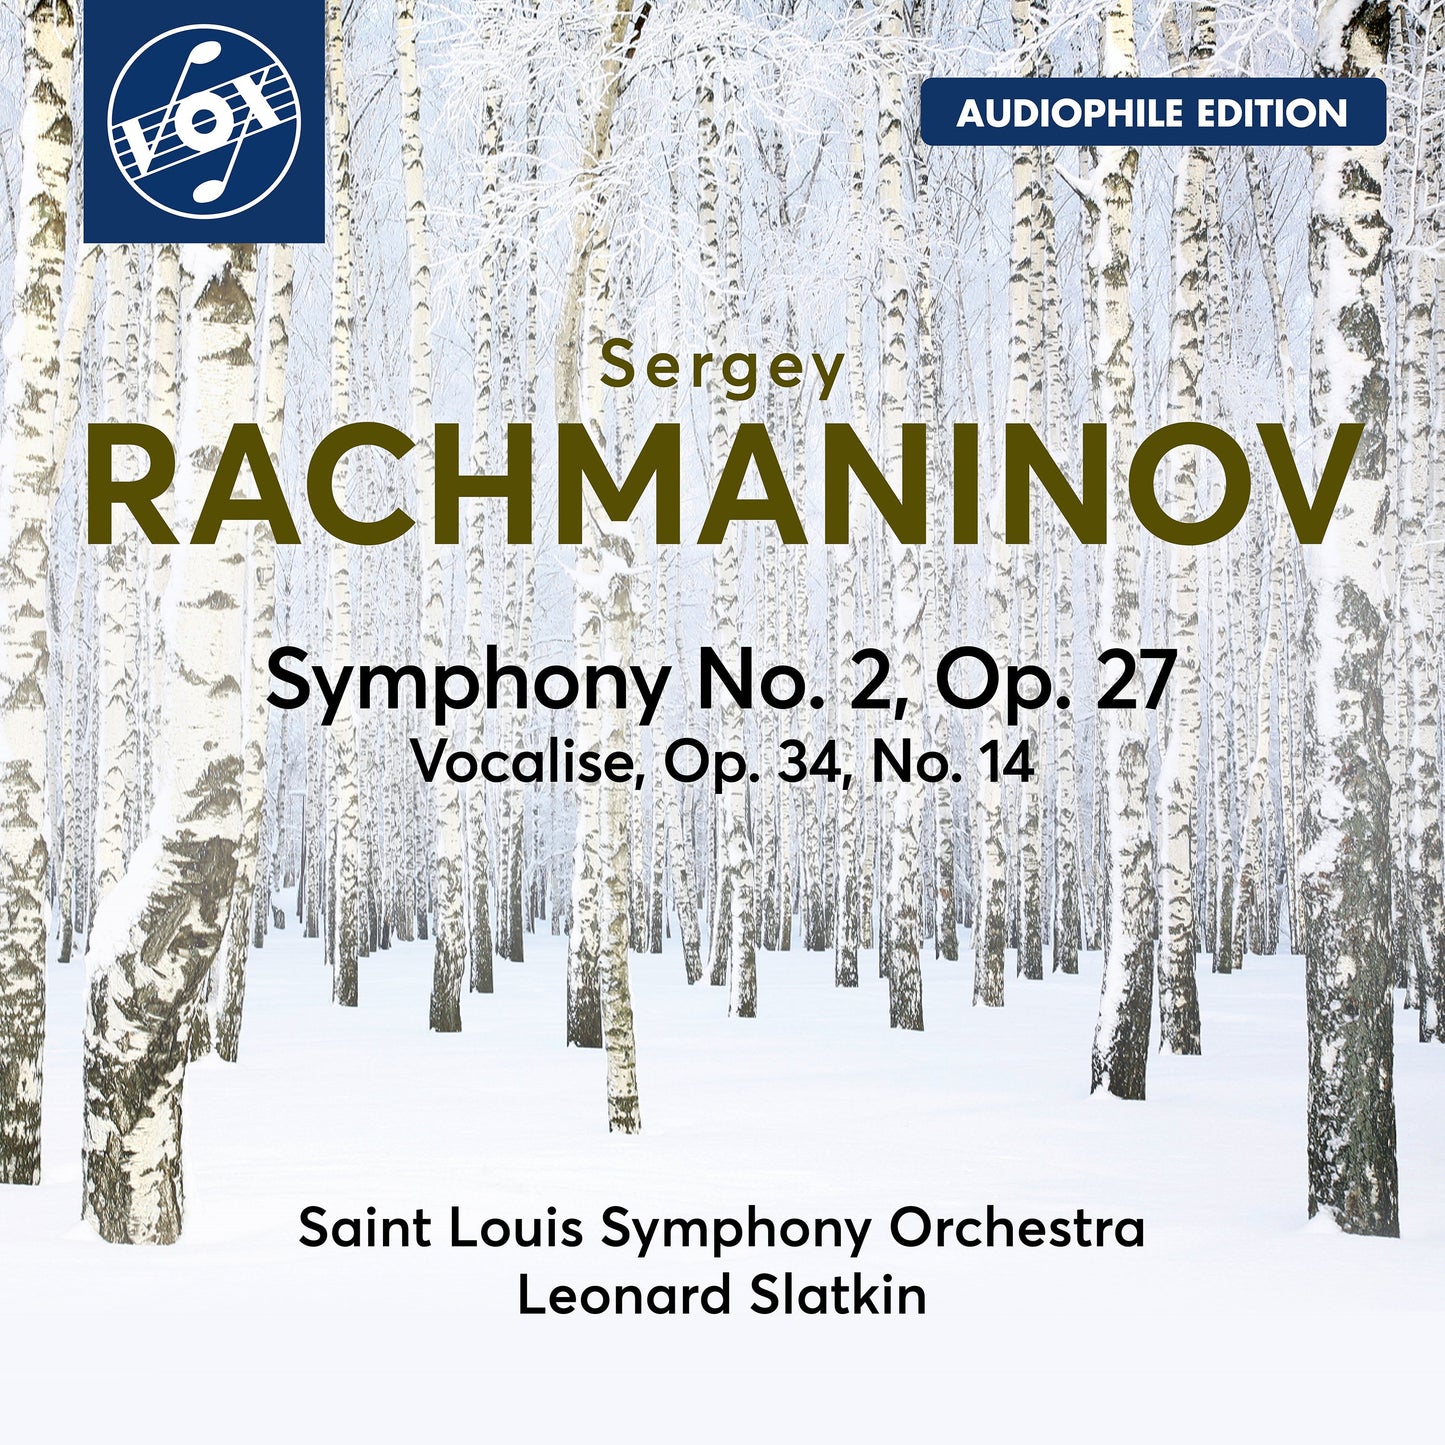 Rachmaninoff: Symphony No. 2, Op. 27